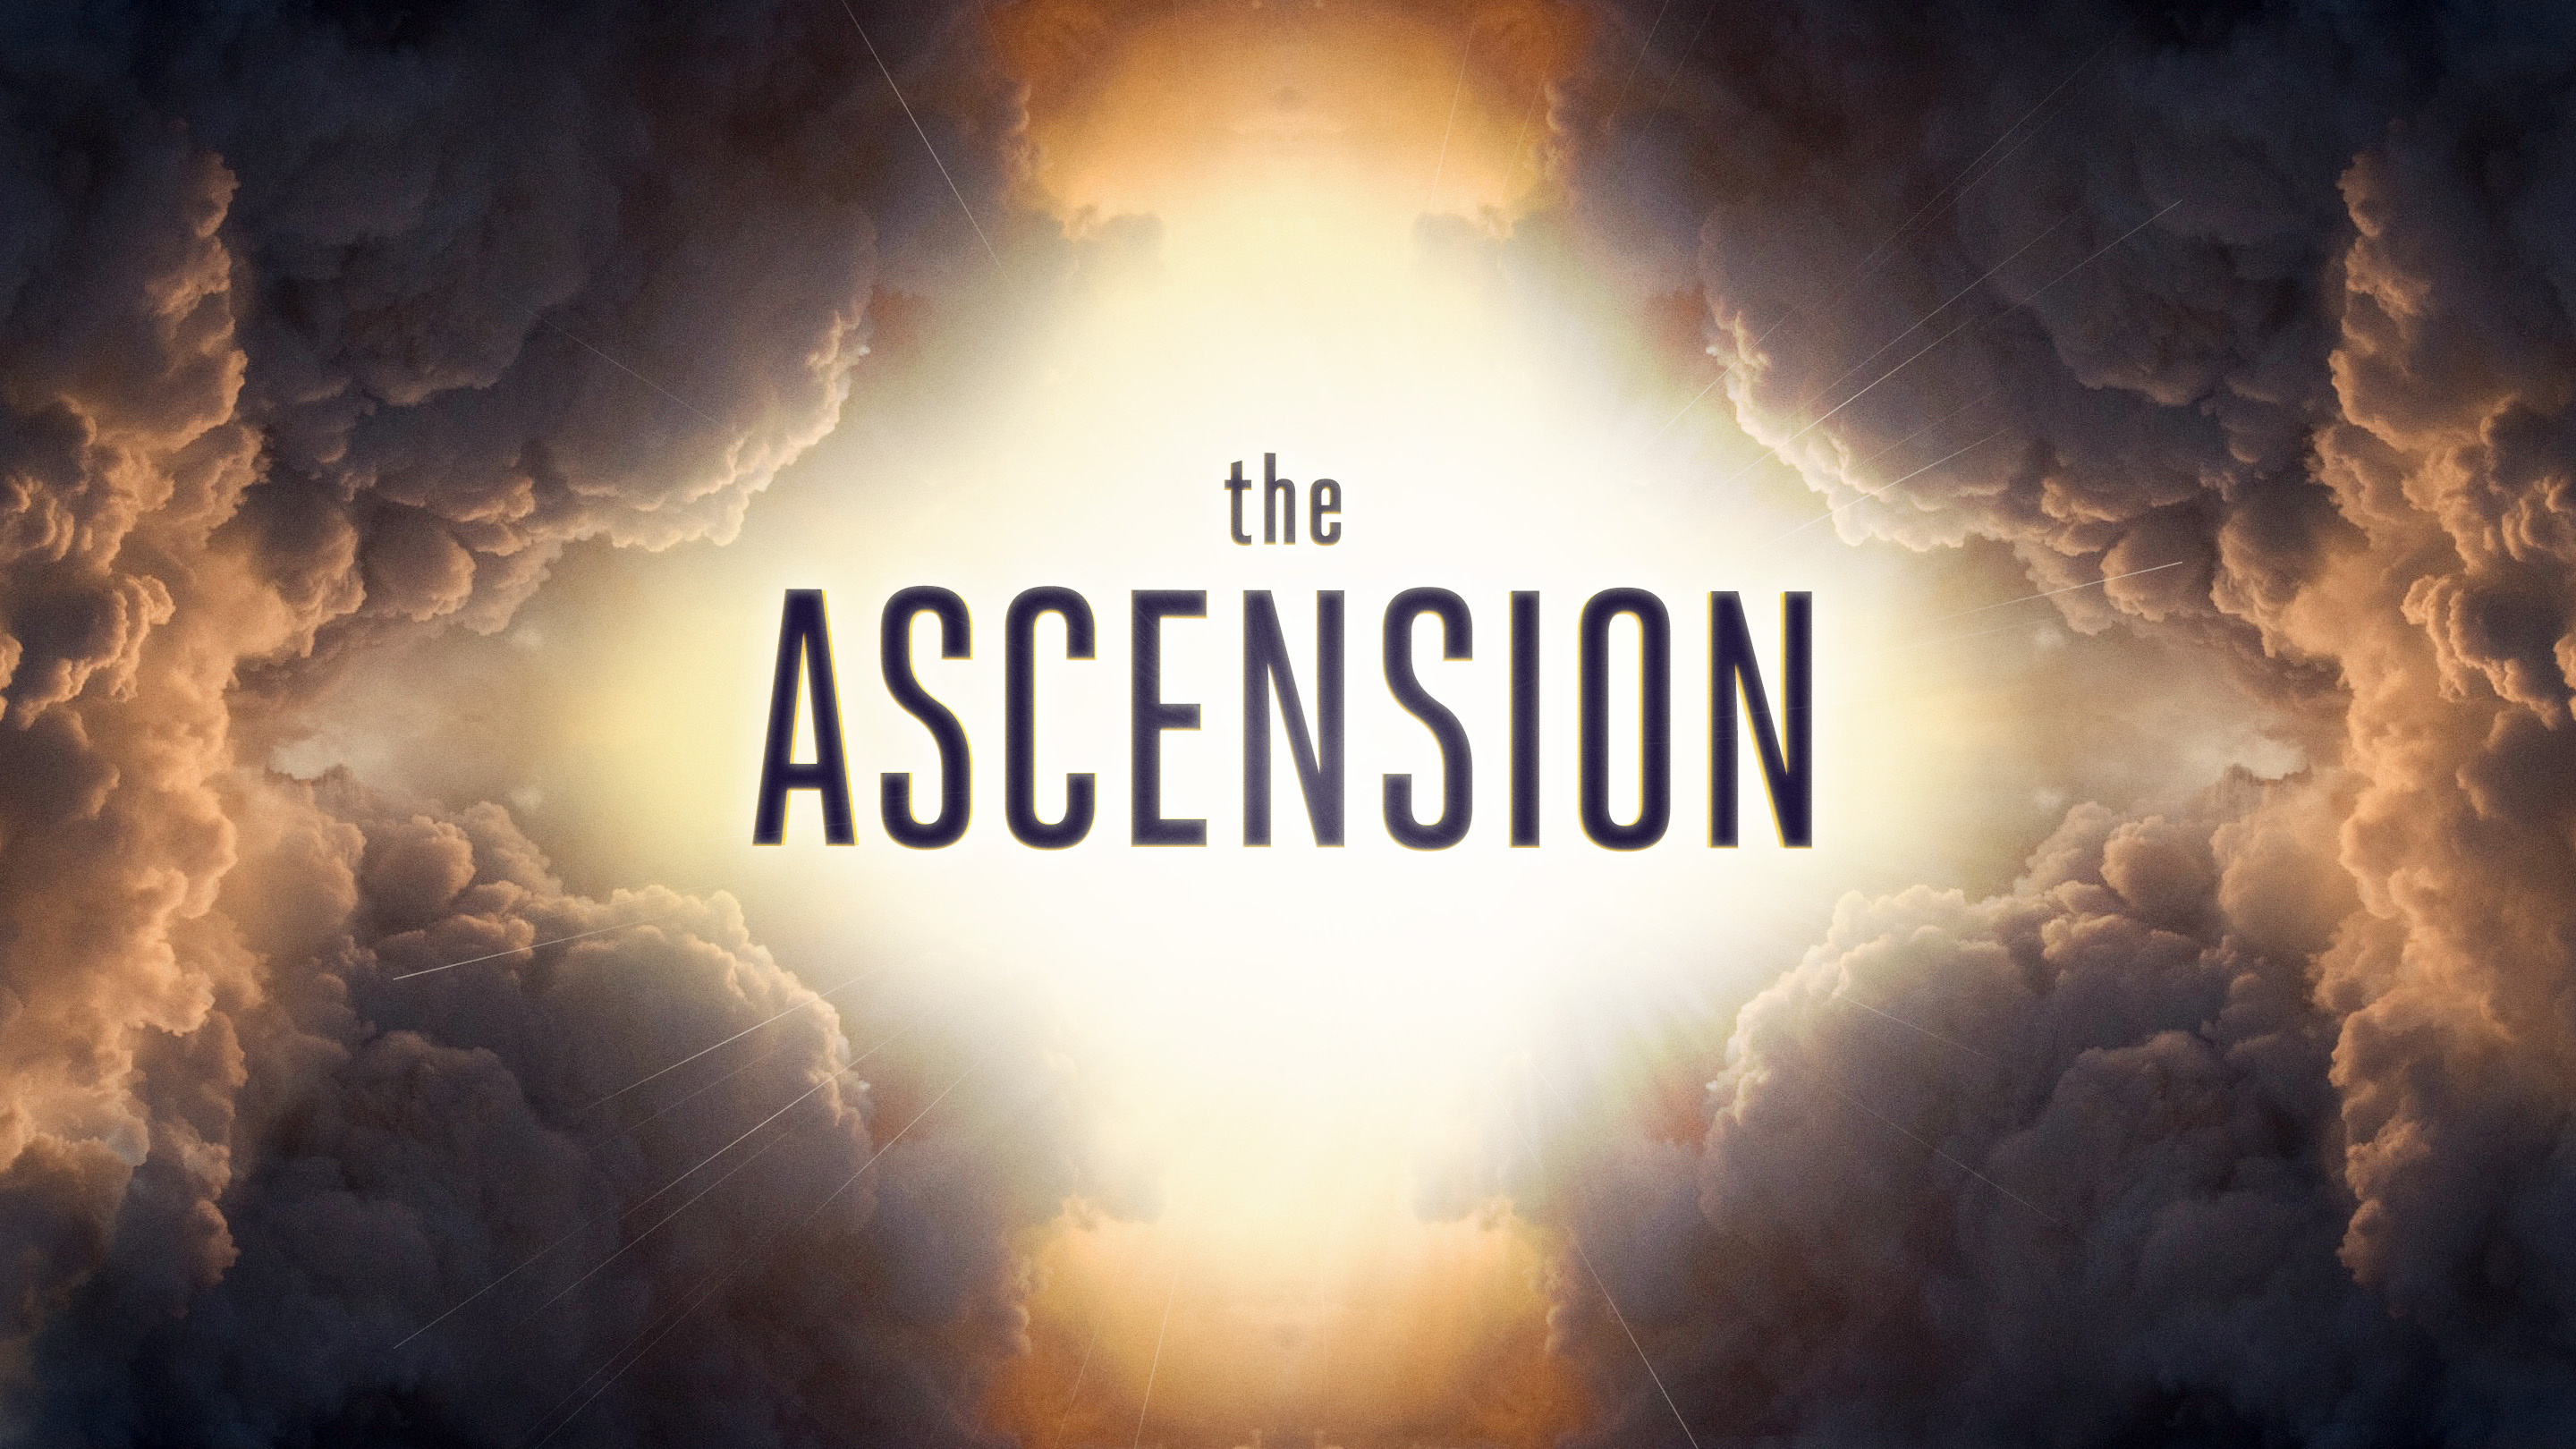 Guild of Ascension free download